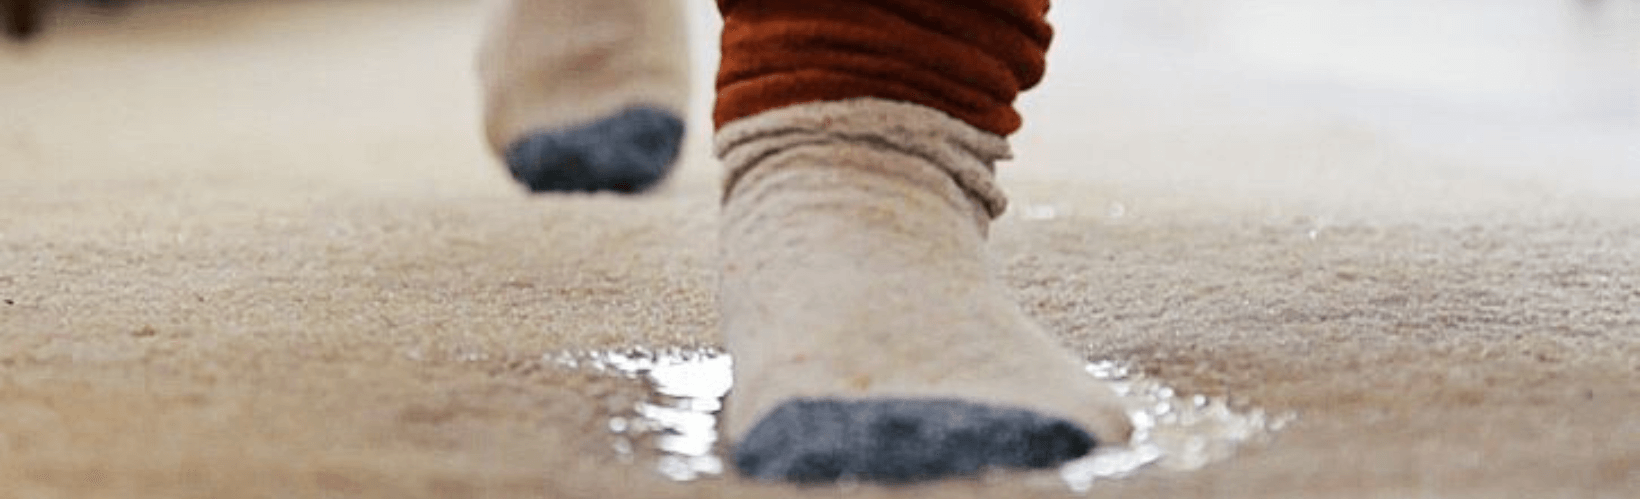 Socked foot on wet carpet puddle (1)